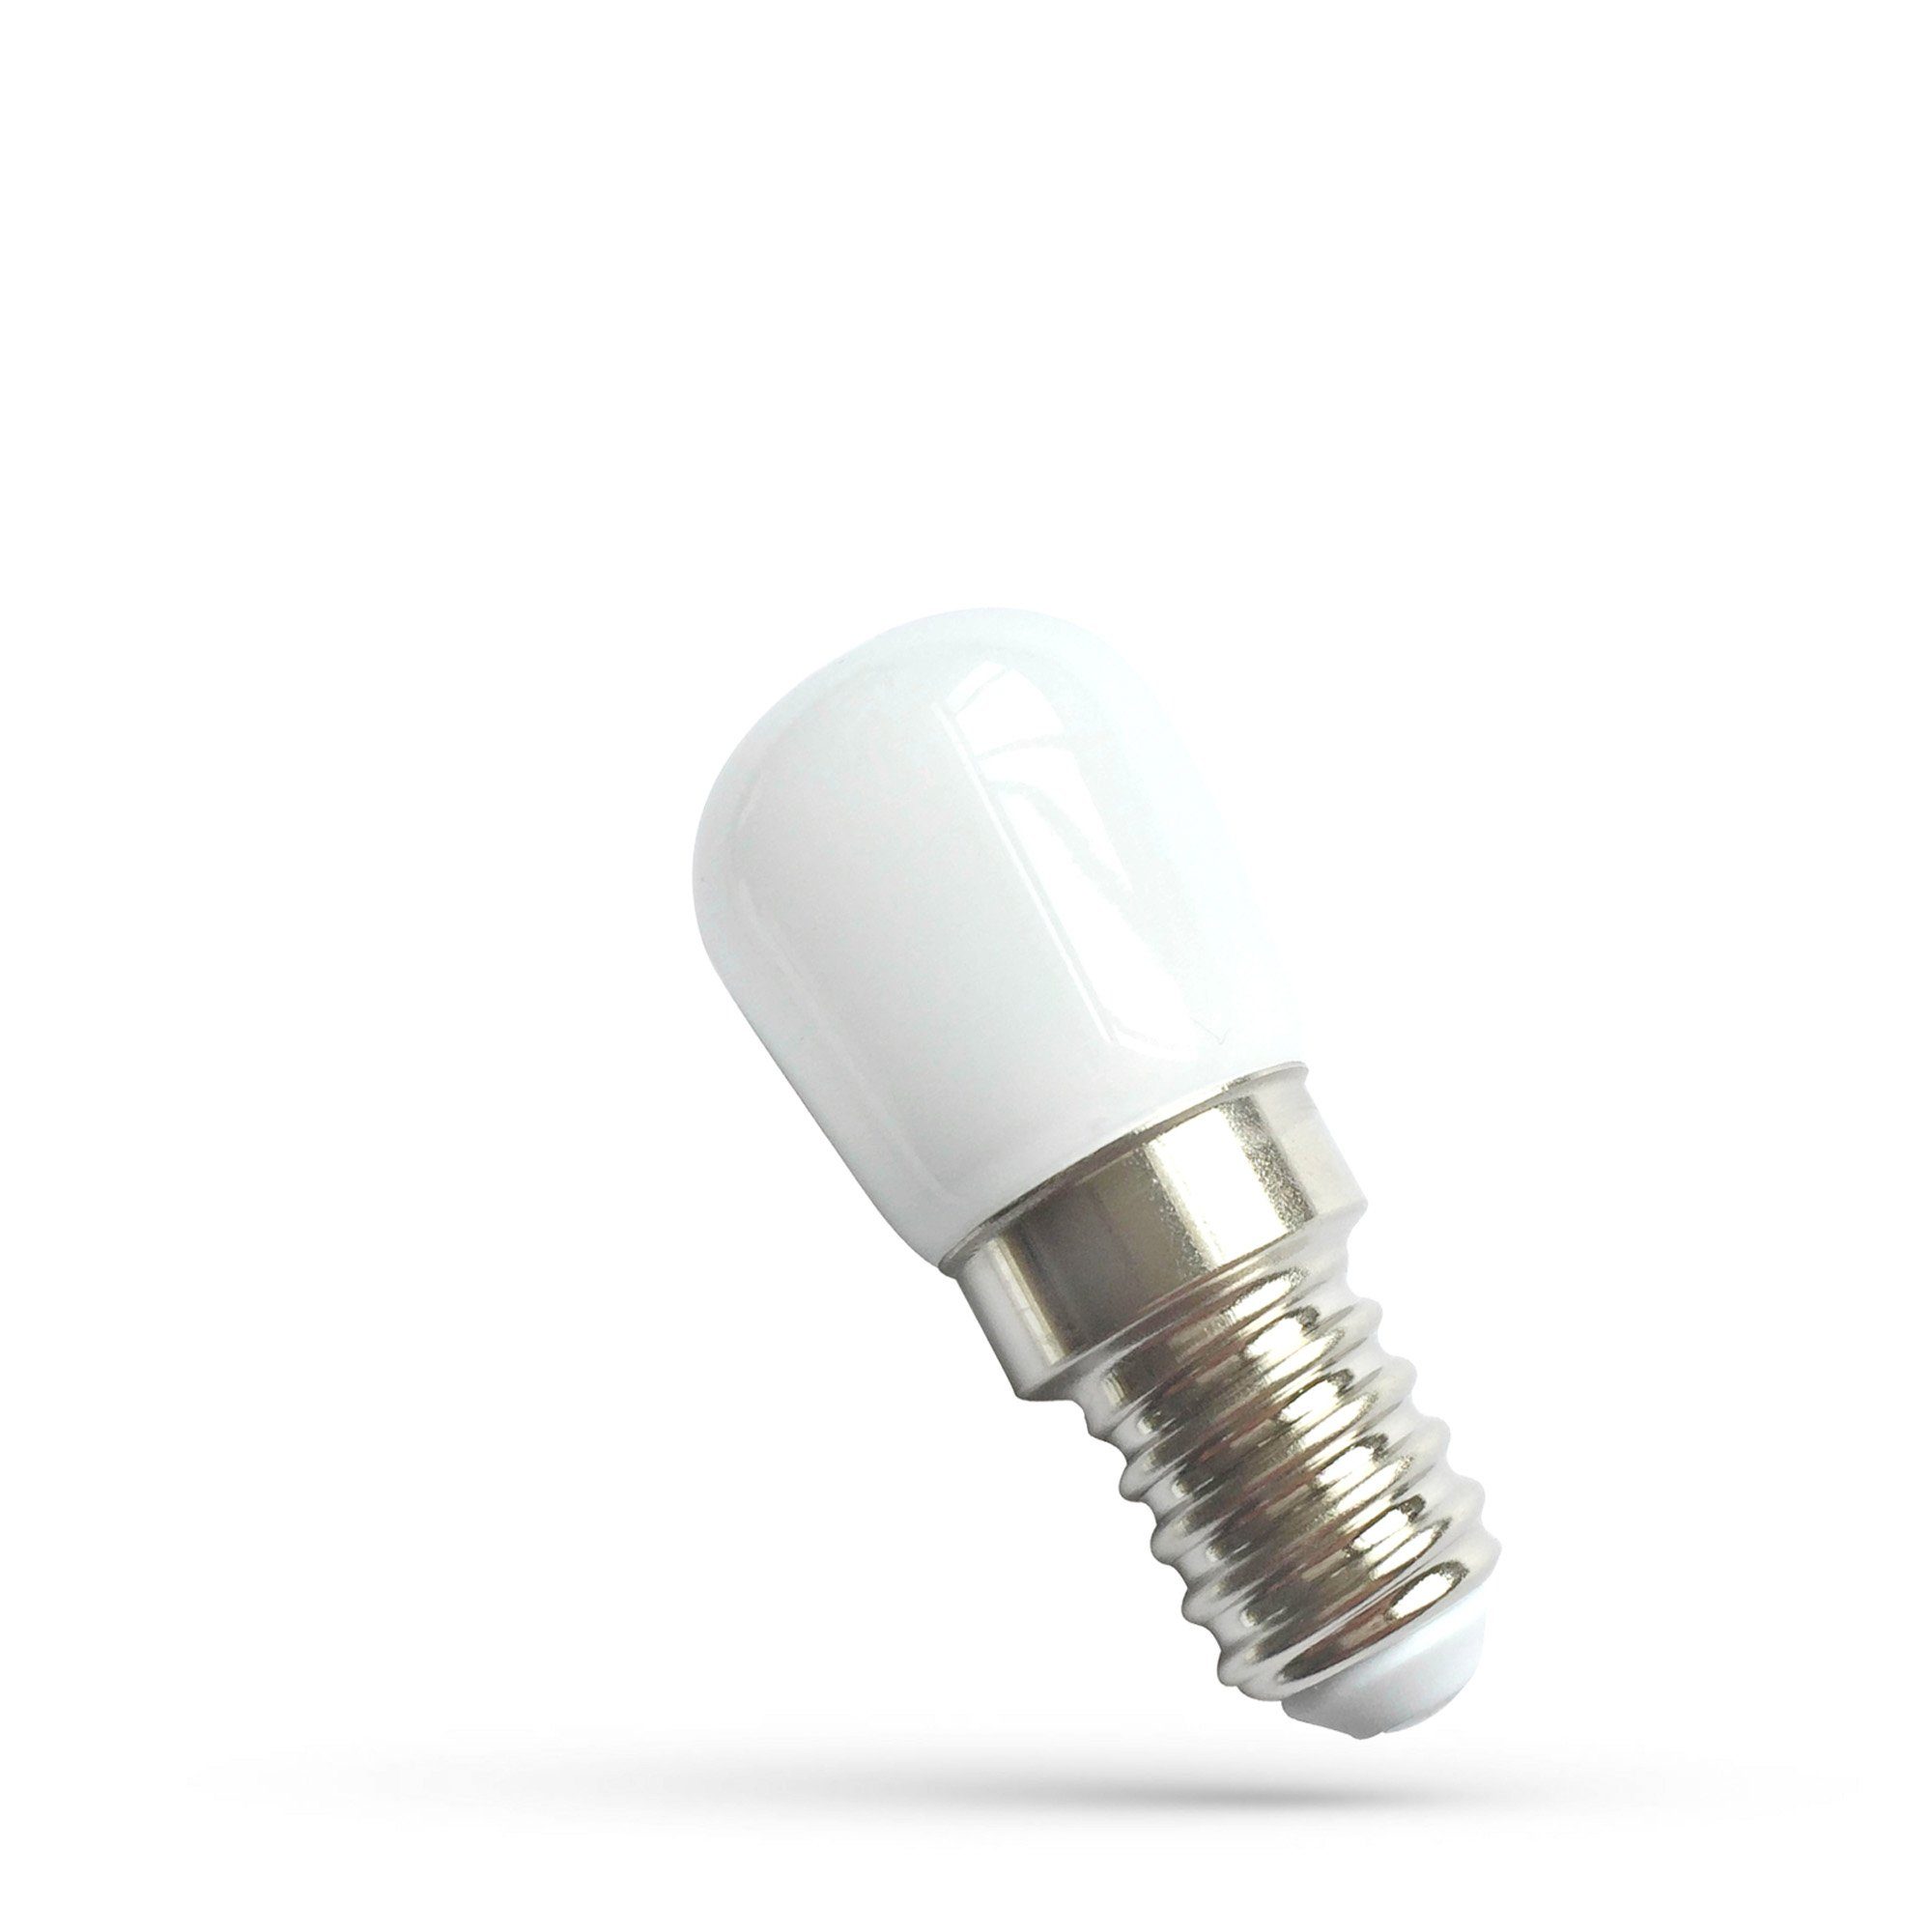 Kaltweiß E14 LED-Leuchtmittel Kaltweiß SpectrumLED 150lm matt 6000K, E14, T26 16W Lampe LED = 1,5W Kühlschrank